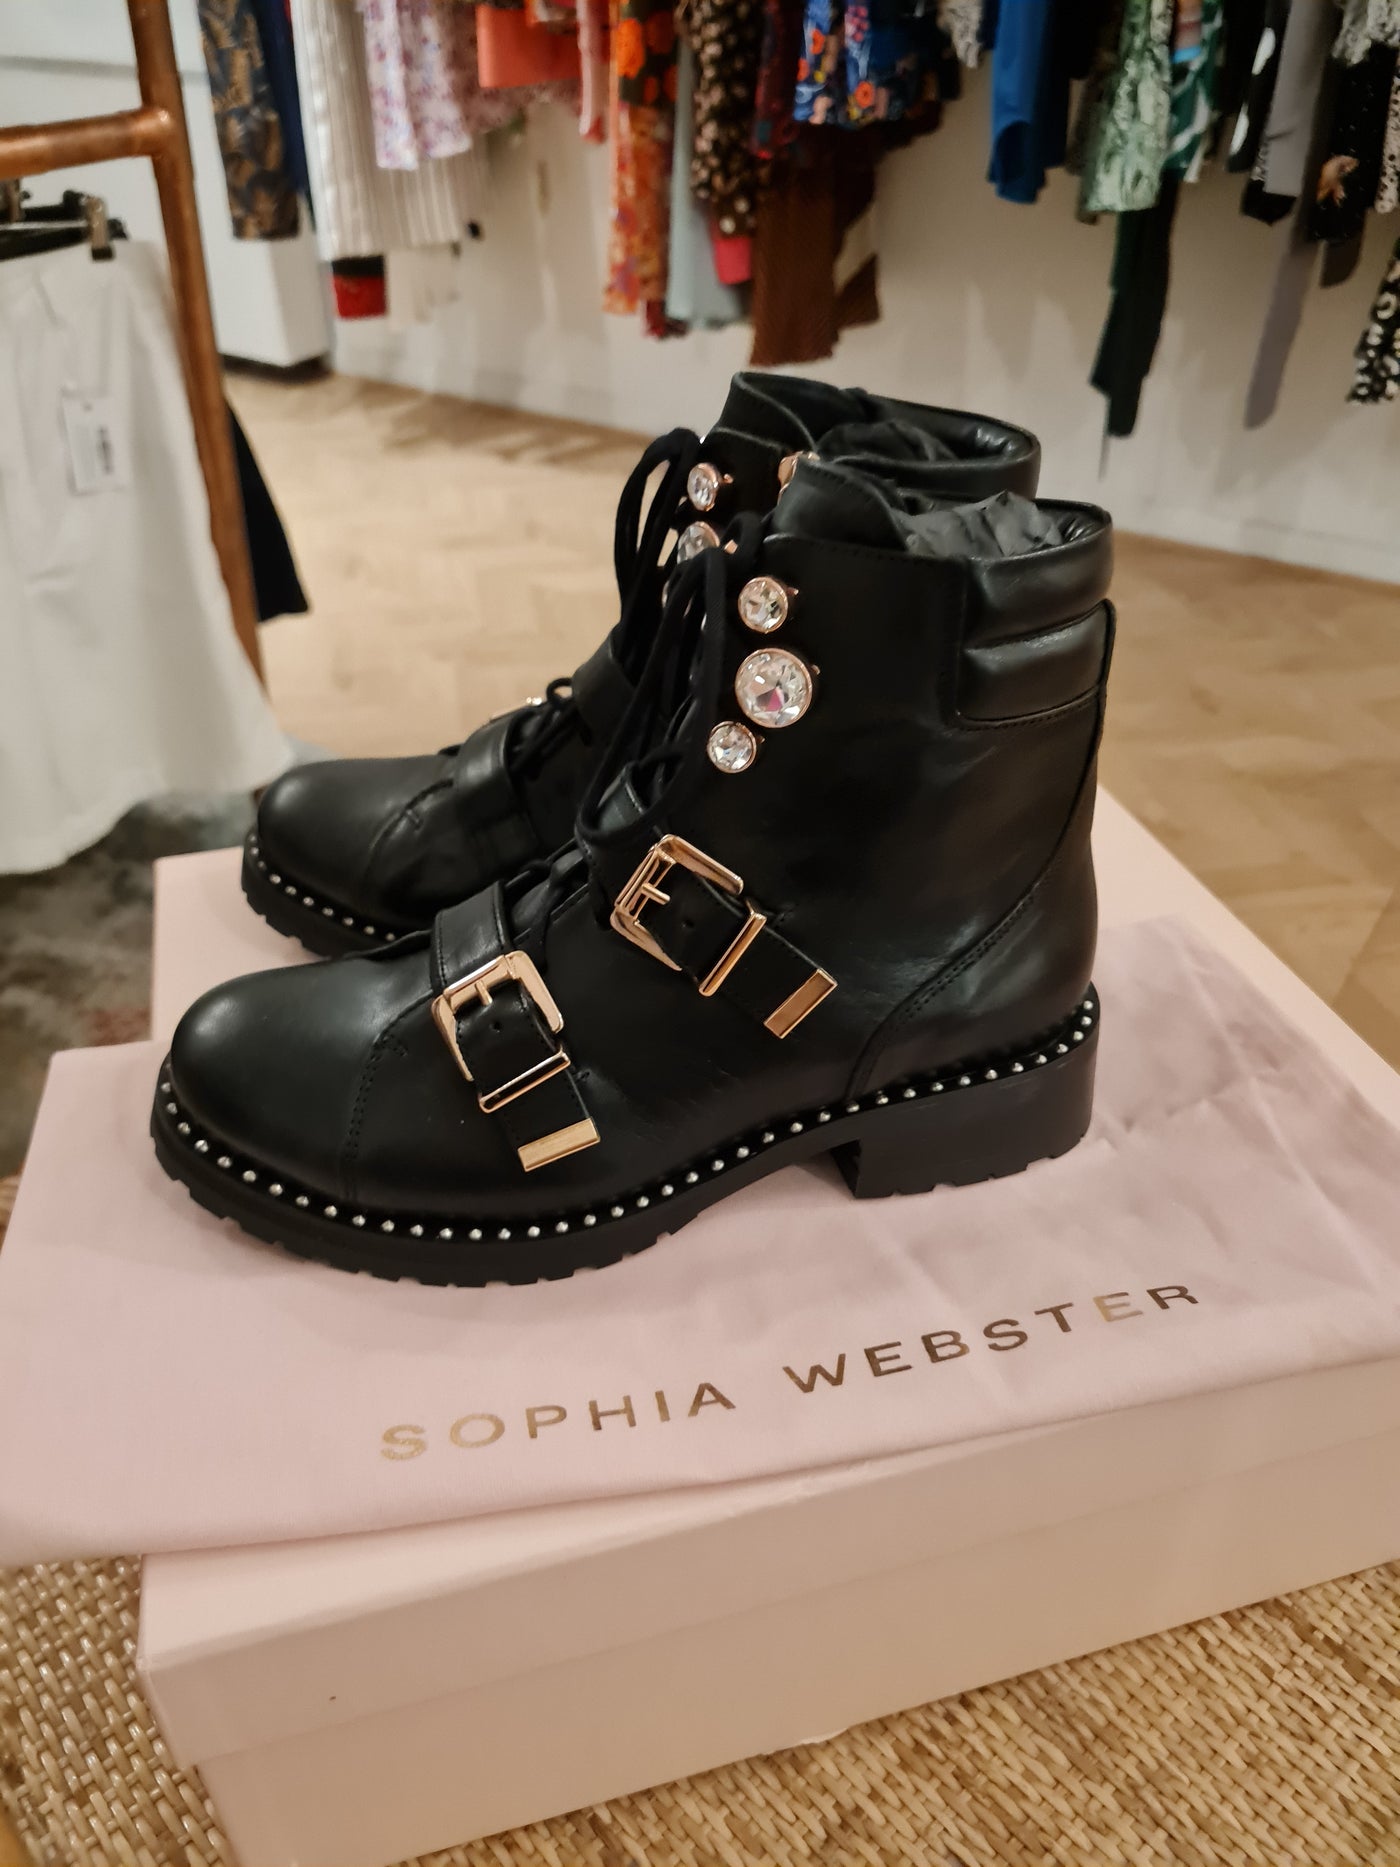 Sophia Webster Biker Boots 5 New